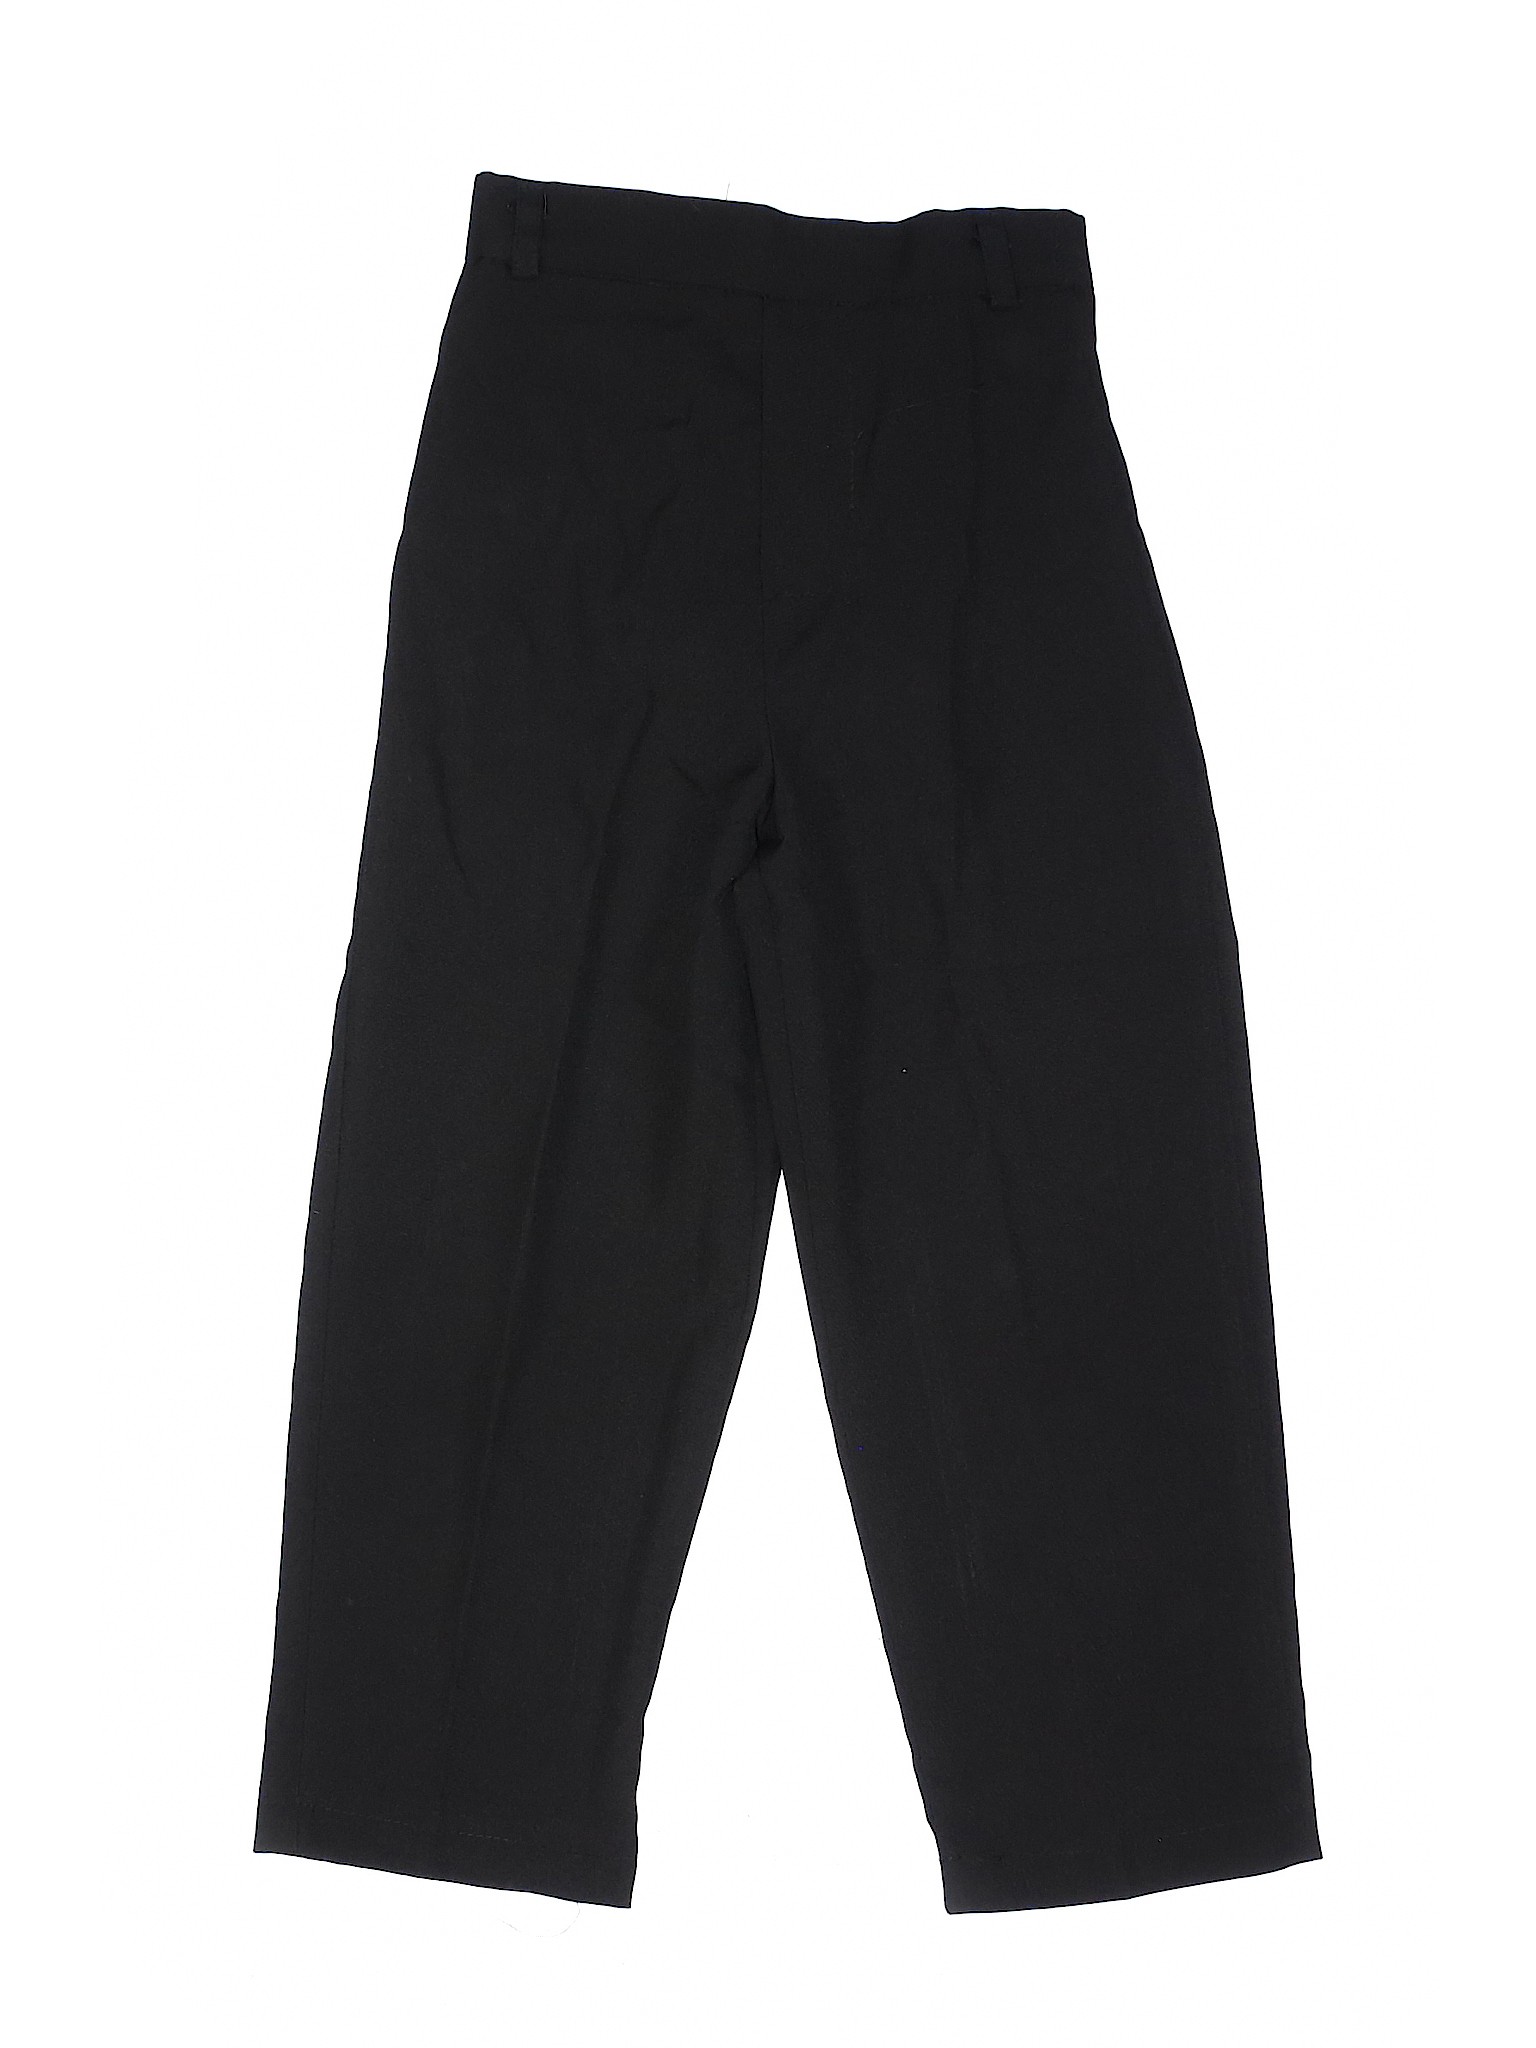 Unbranded Boys Black Dress Pants 5 | eBay